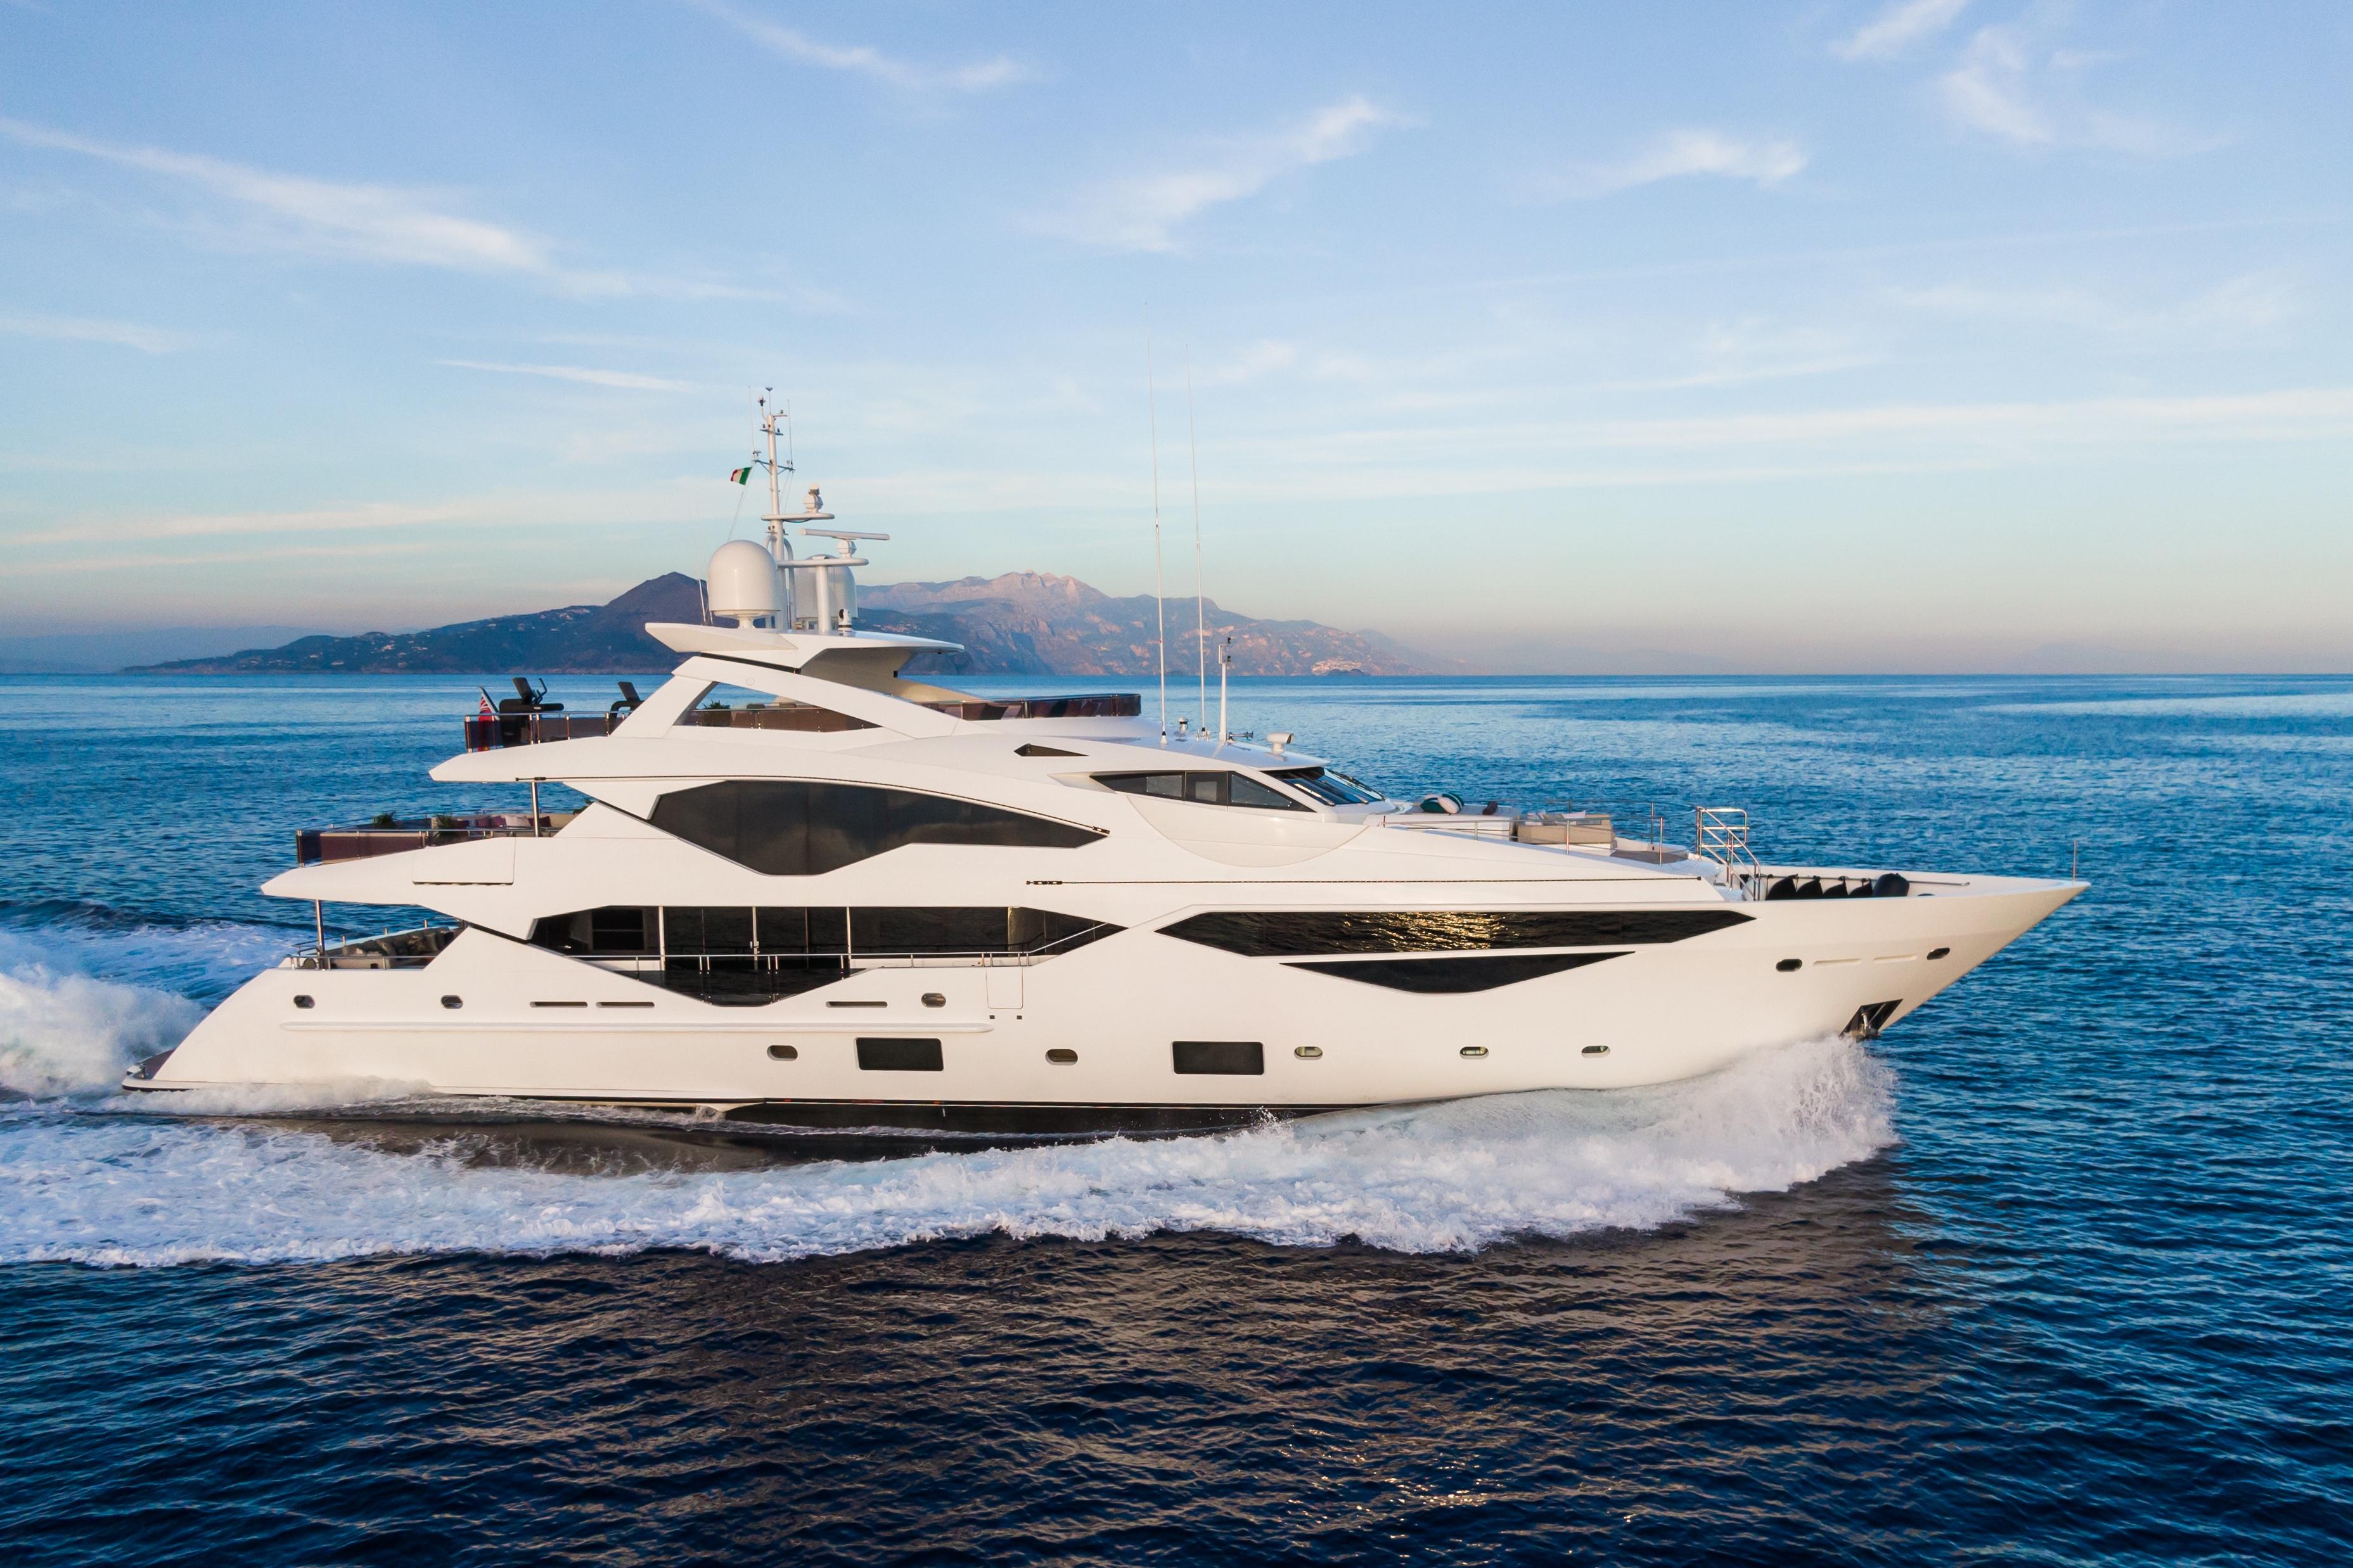 vervece yacht for sale price